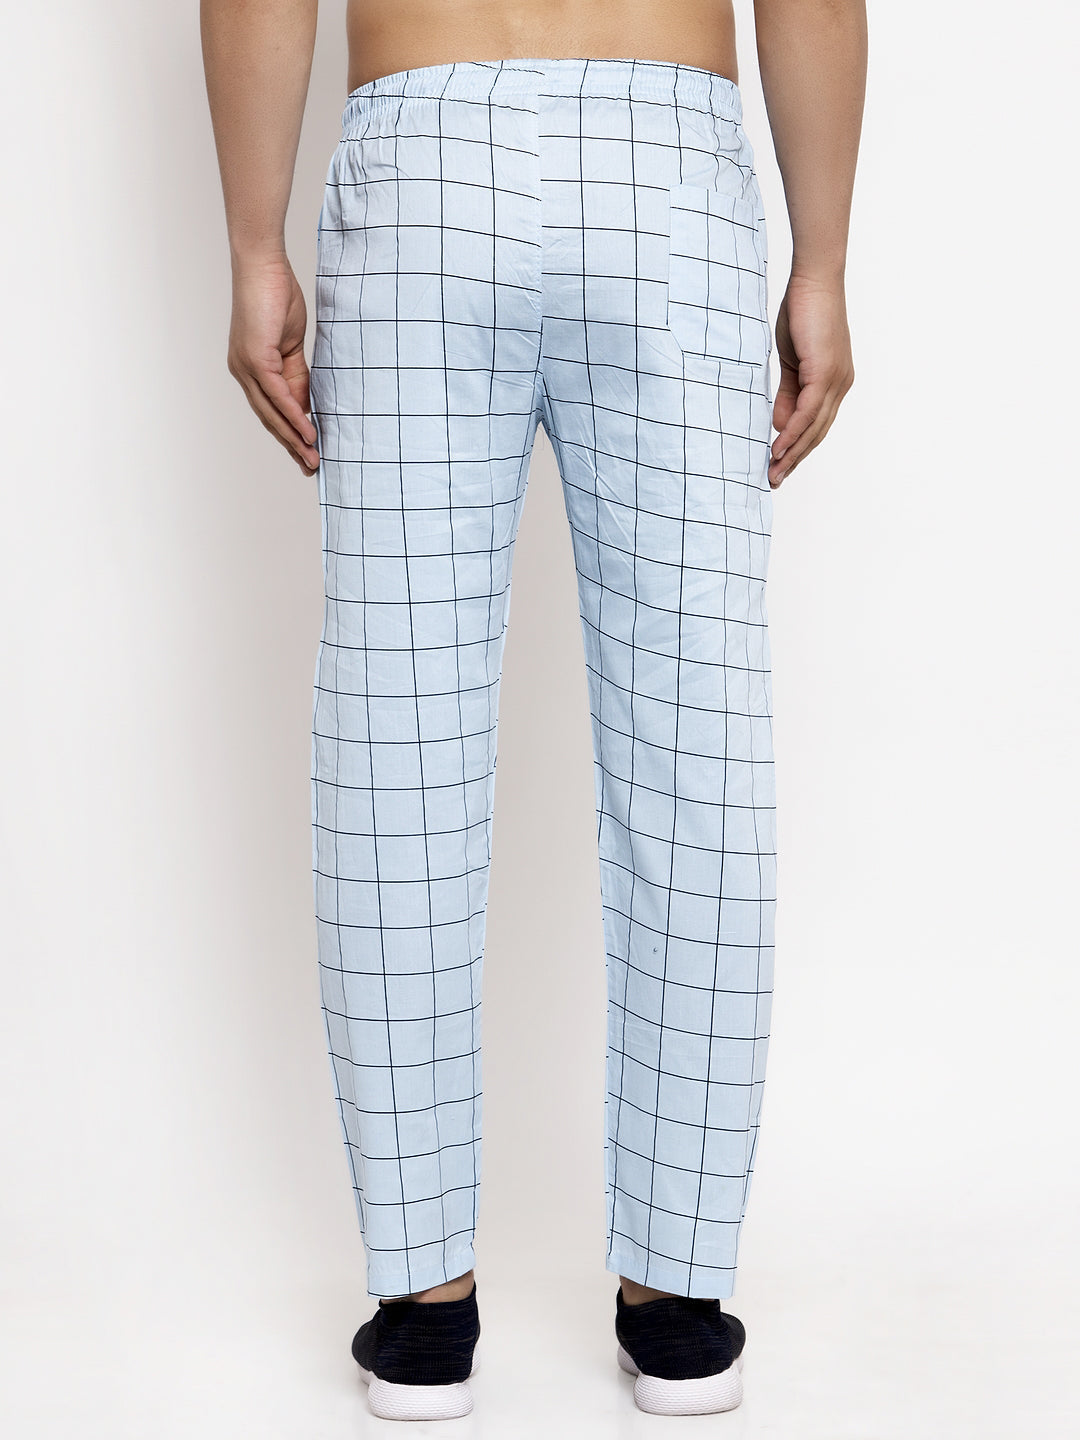 Men's Blue Checked Cotton Track Pants ( JOG 012Sky ) - Jainish